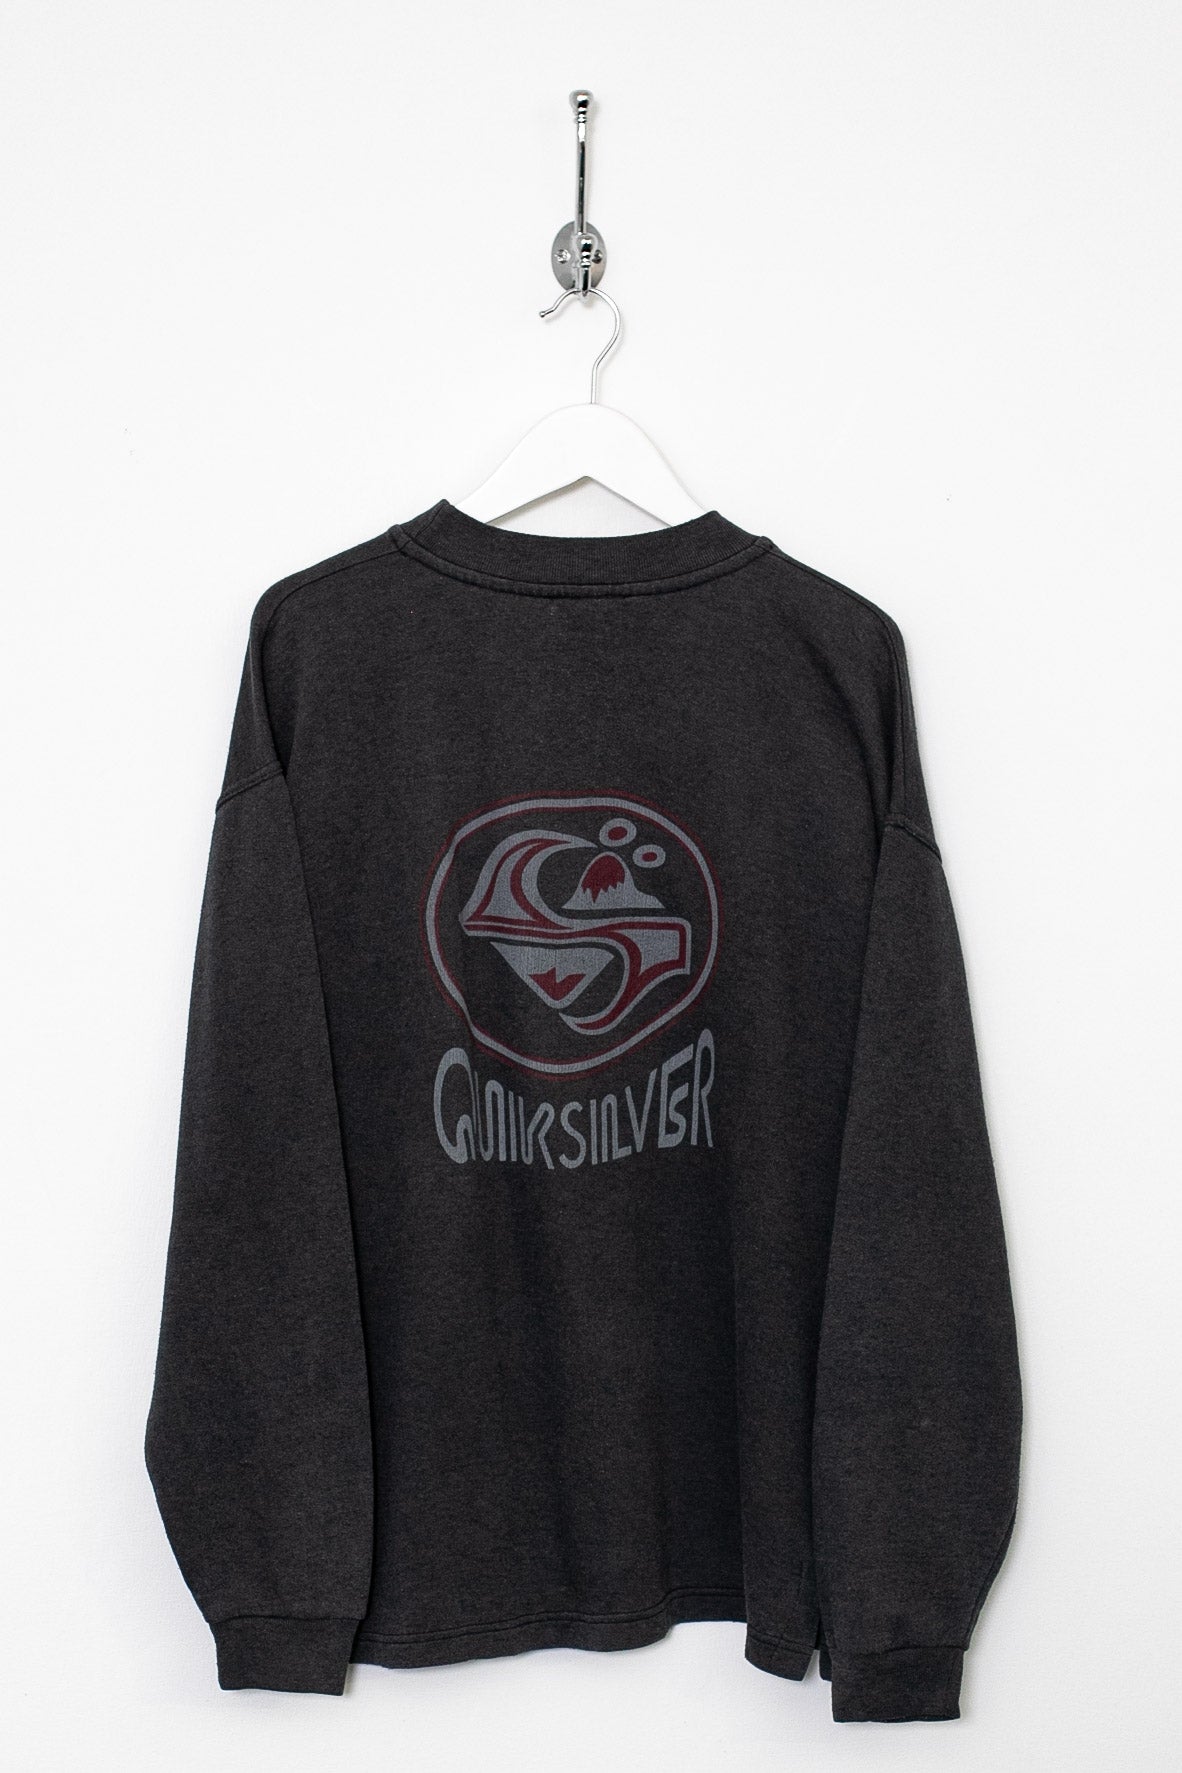 90s Quicksilver Sweatshirt (M)